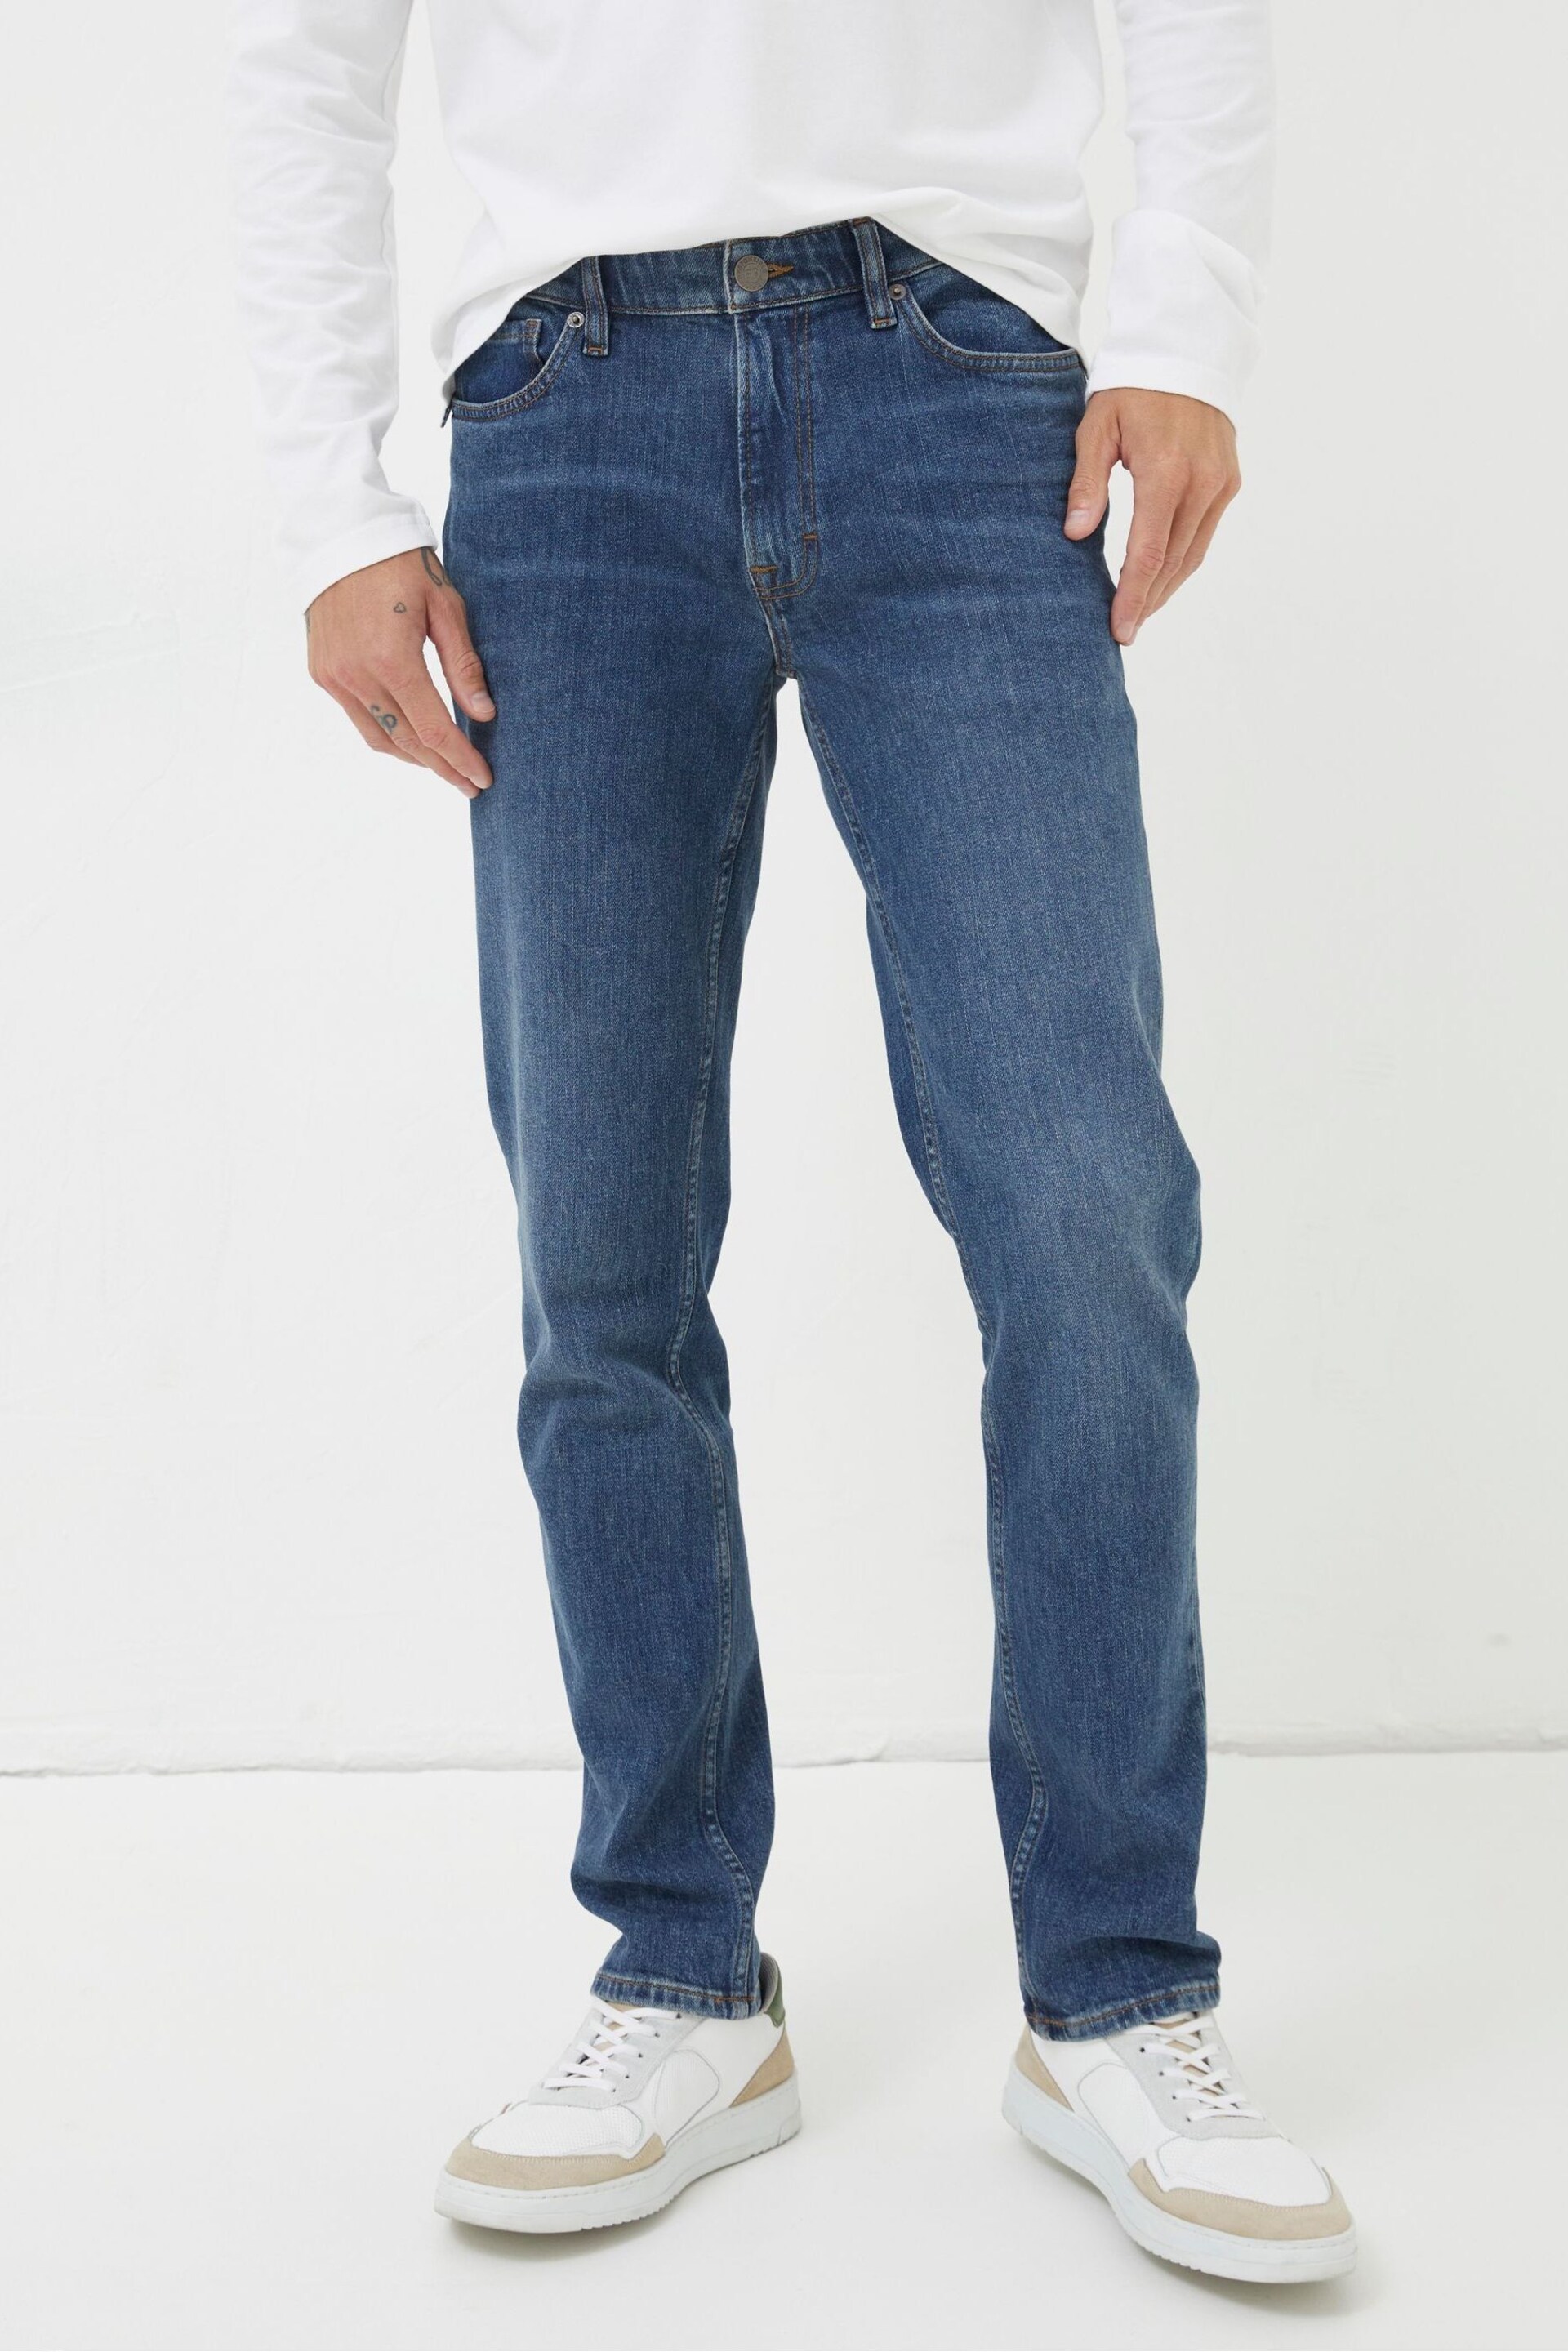 FatFace Indigo Blue Slim Fit Jeans - Image 1 of 6